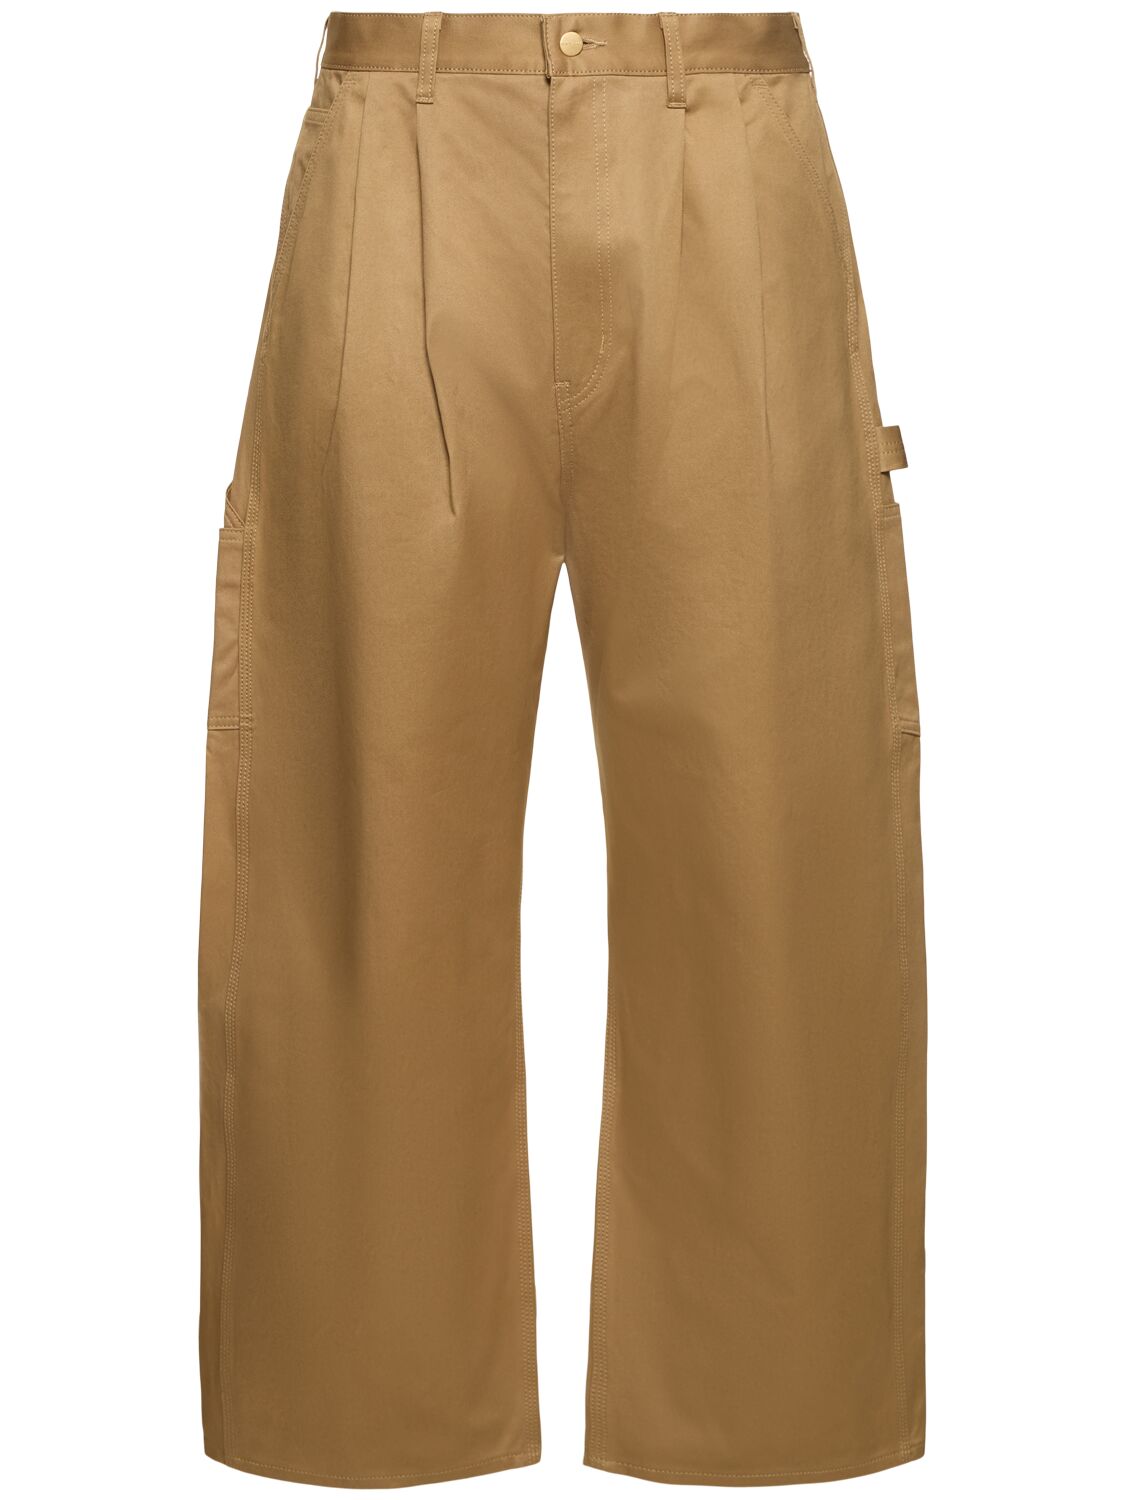 Image of Carhartt Cotton Twill Pants